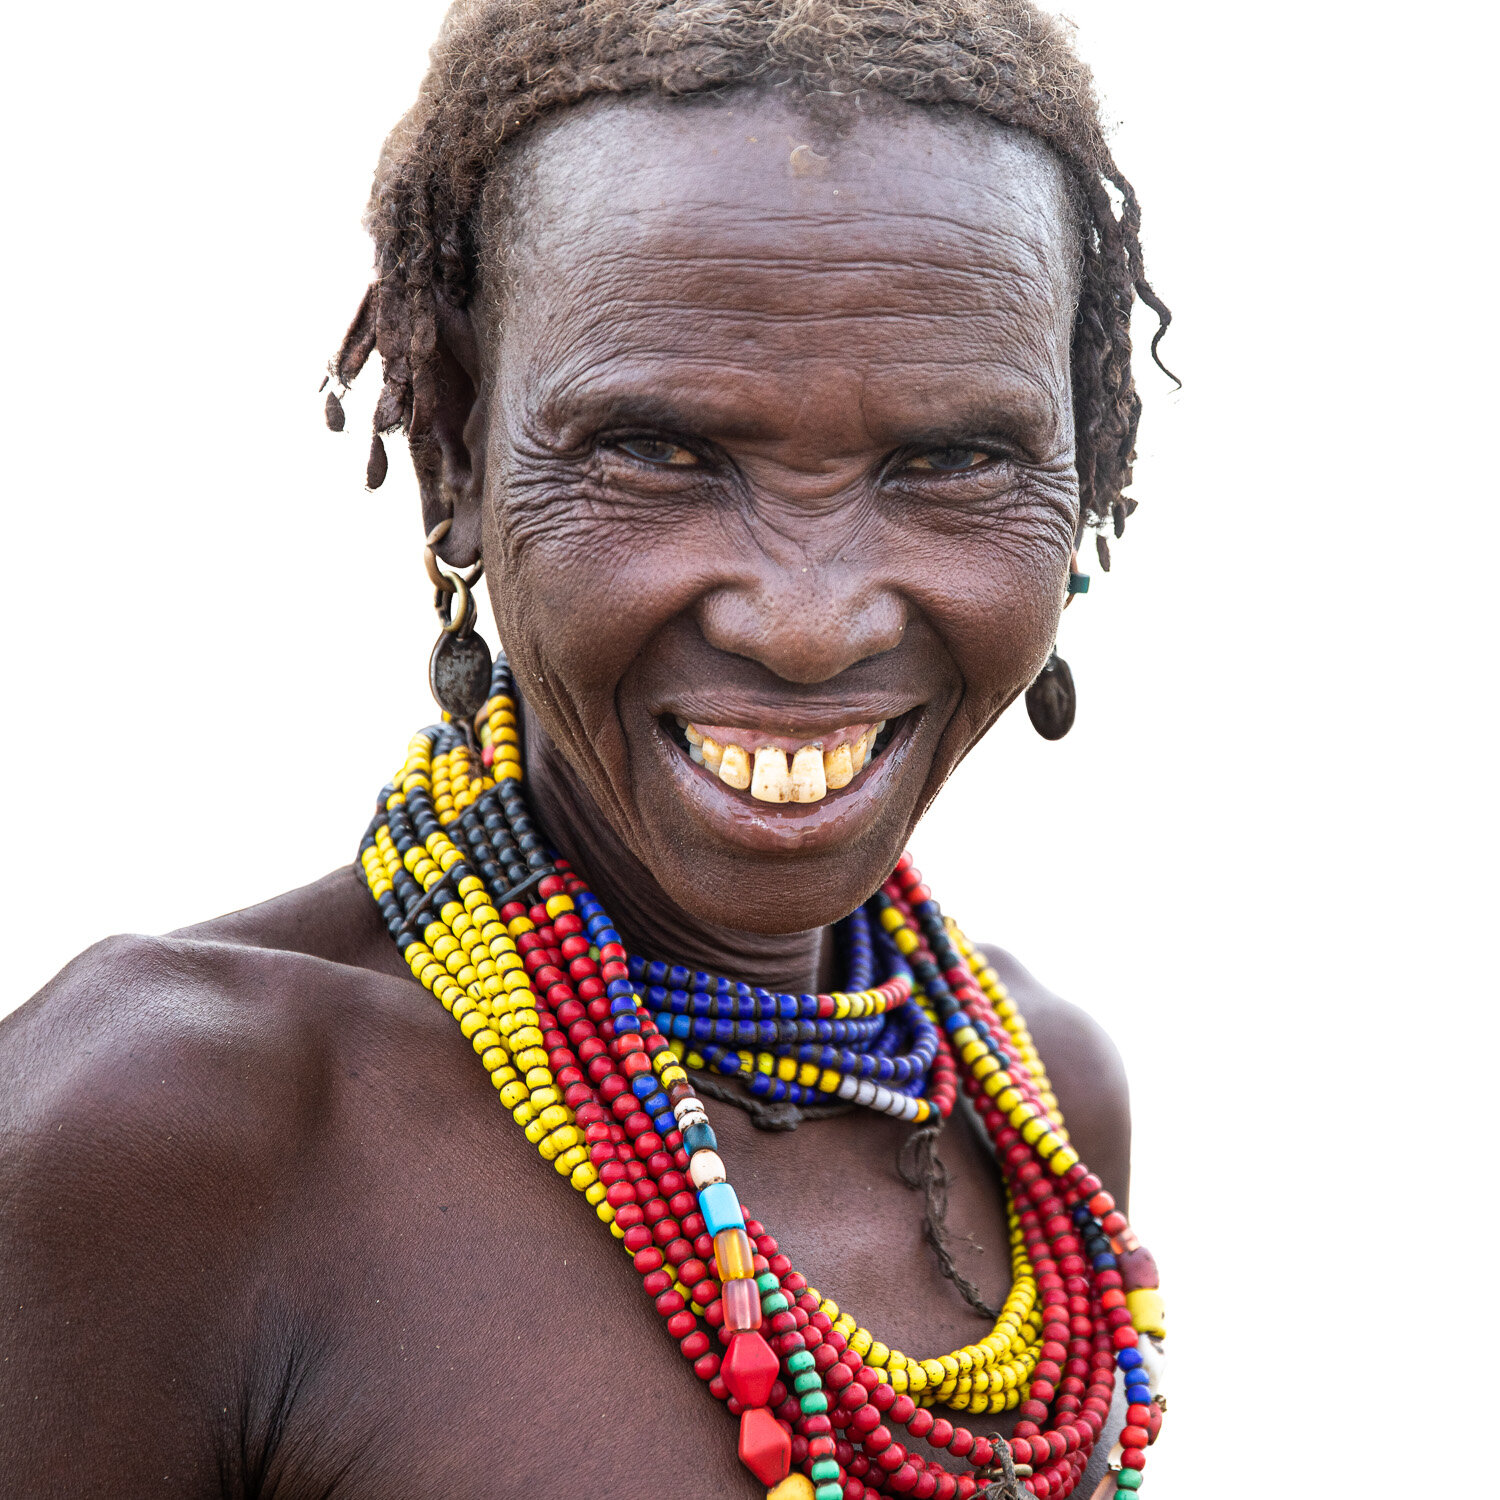 Dassanech woman girl portrait from Ethiopia Omo Valley tribe tour